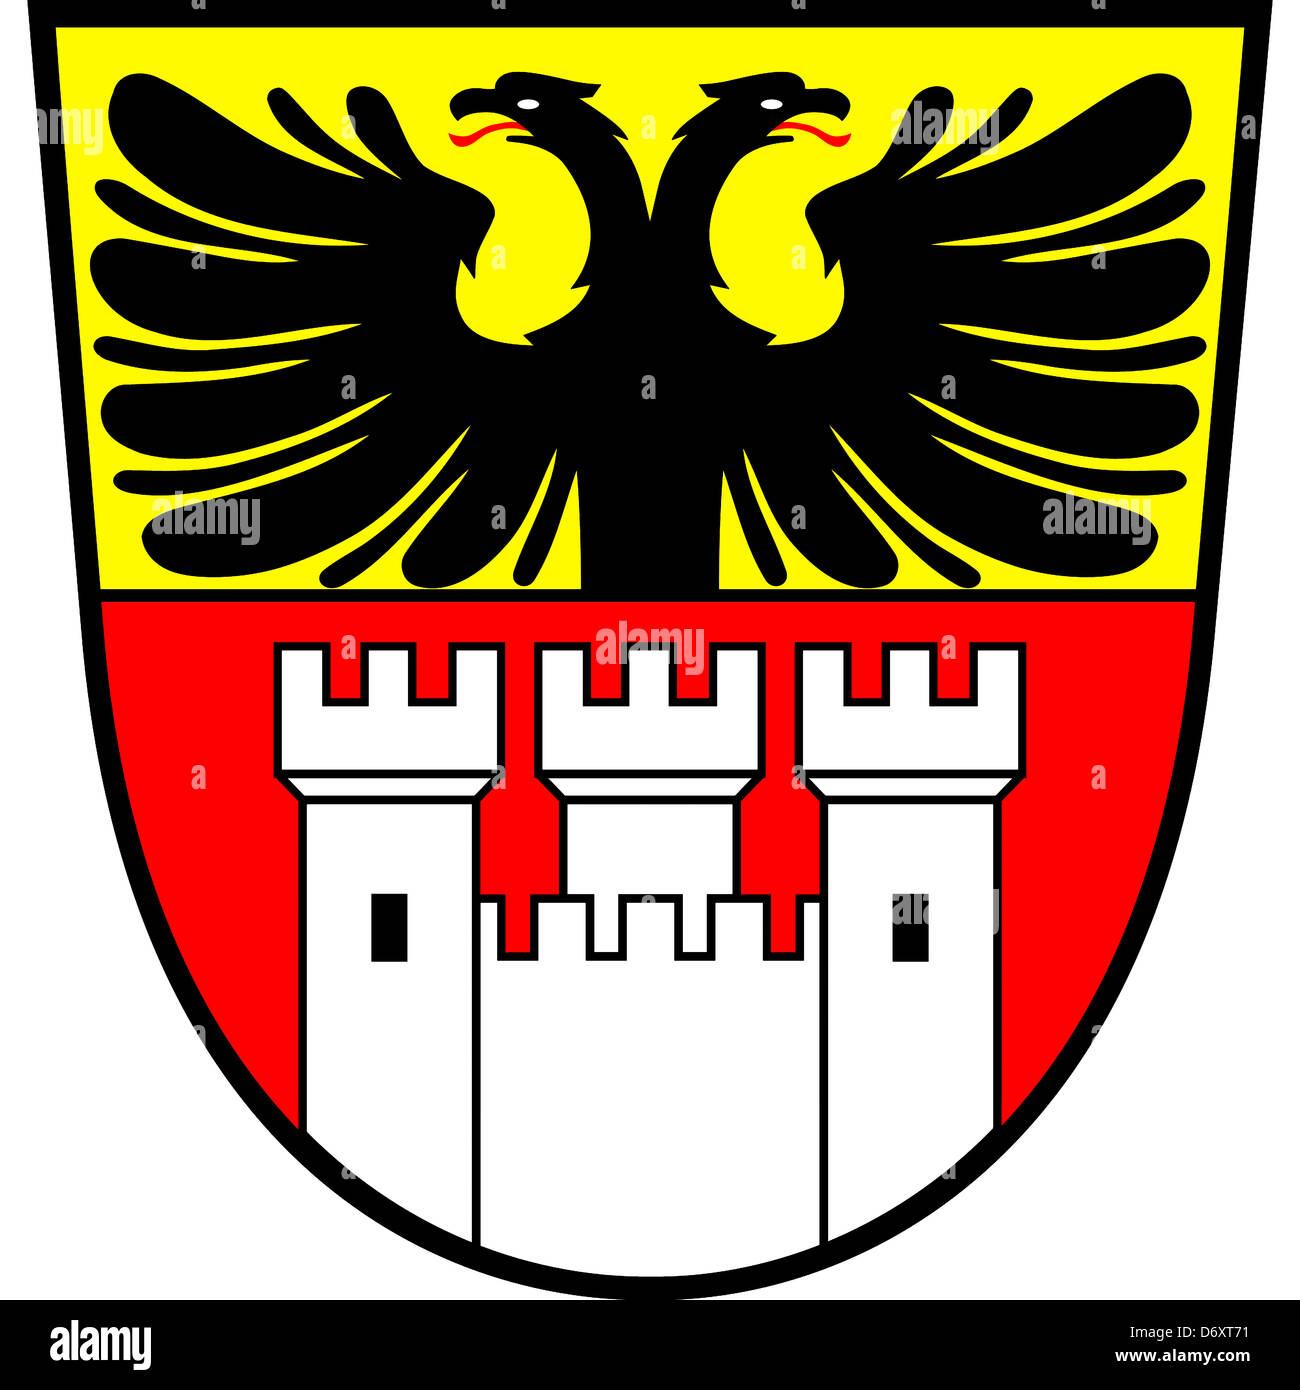 Coat of arms of the German city Duisburg in North Rhine-Westphalia. Stock Photo